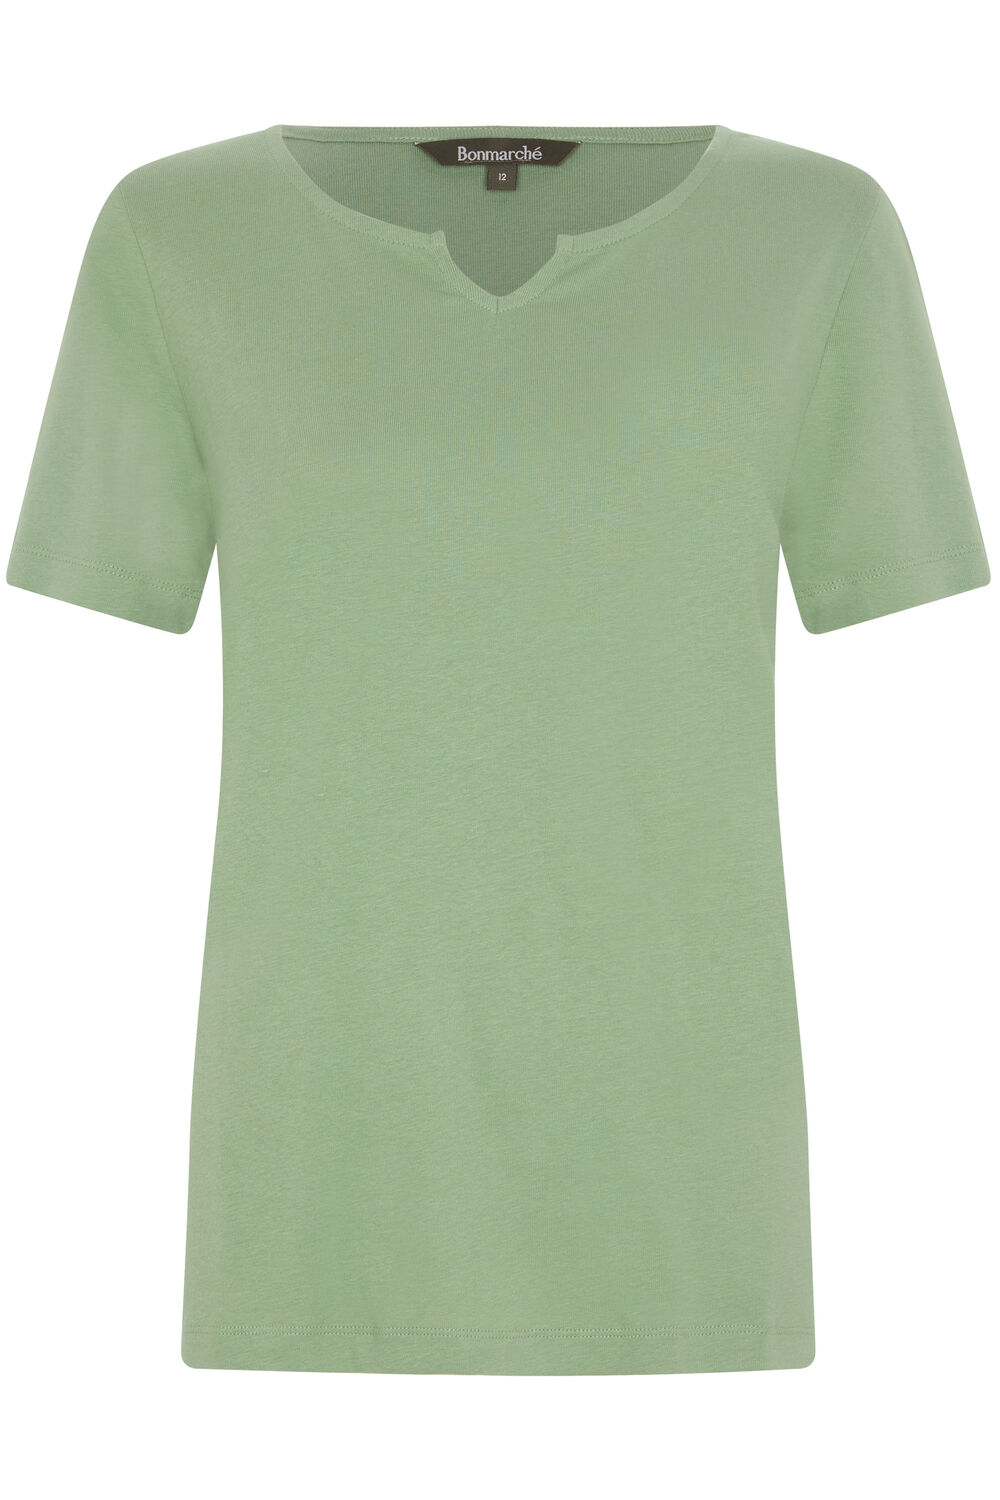 Bonmarche Khaki Short Sleeve Plain Notch Neck T-Shirt, Size: 14